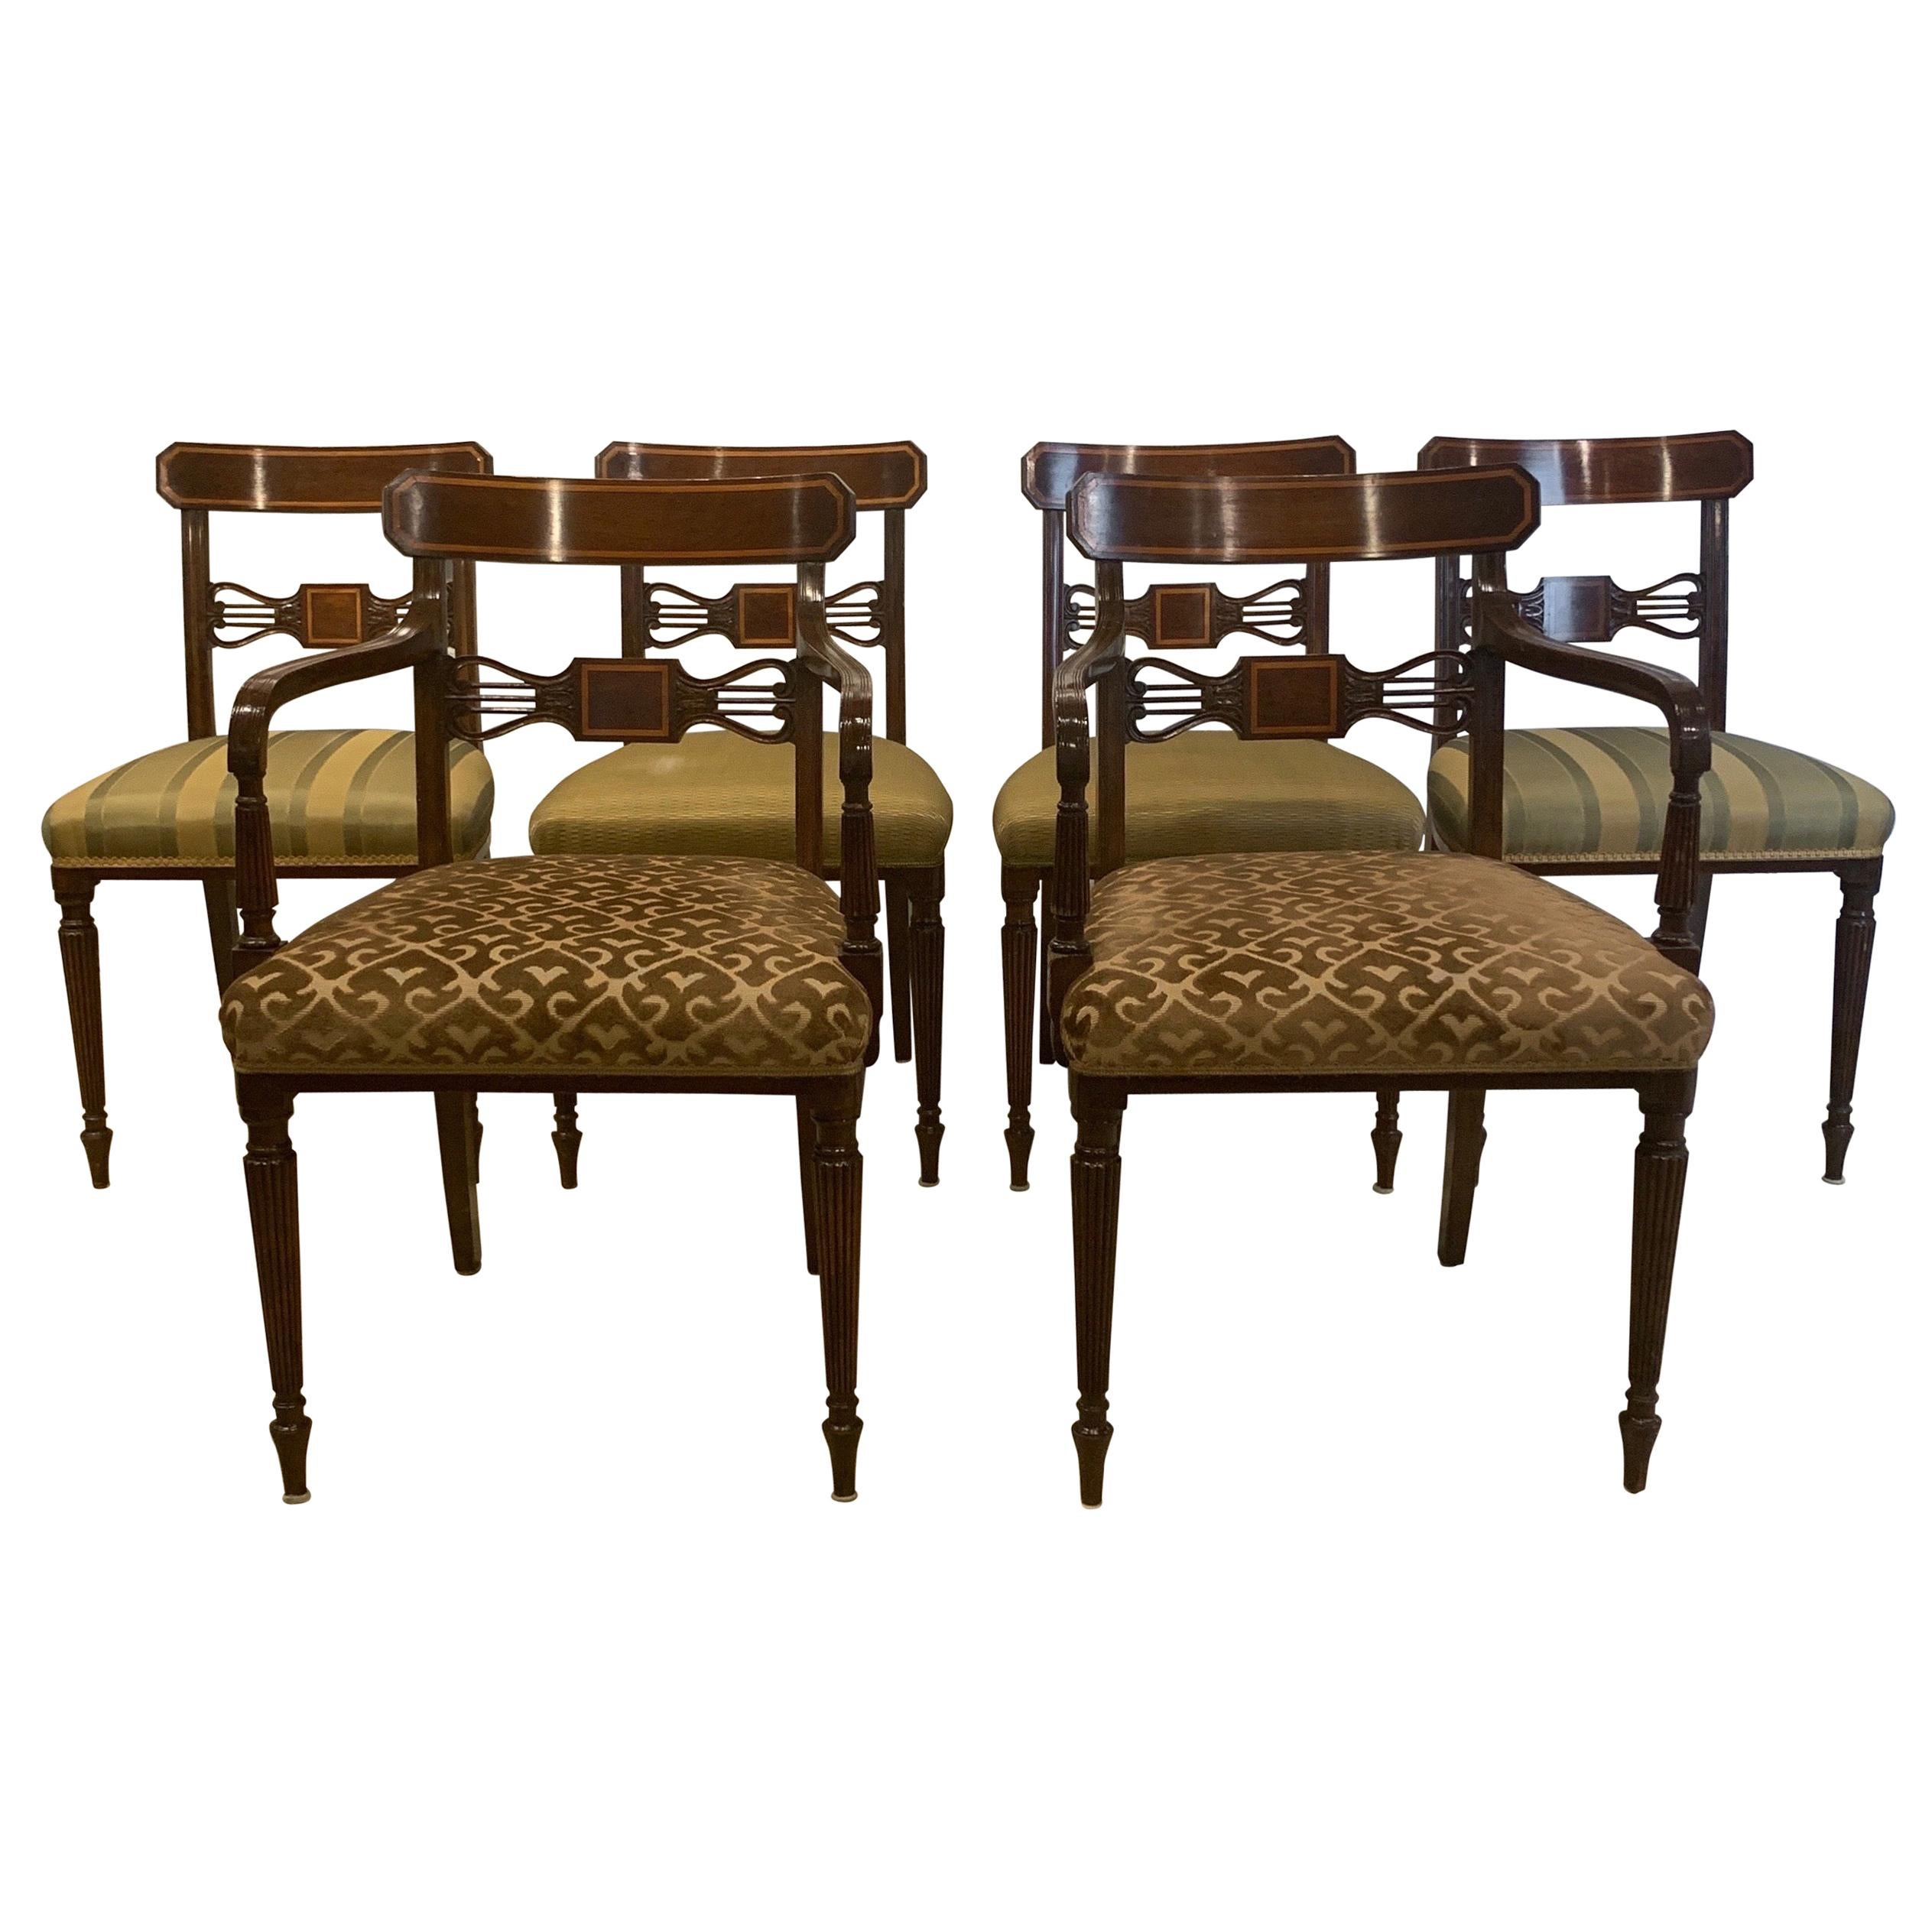 Set of 6 Mahogany Sheraton Style Chairs